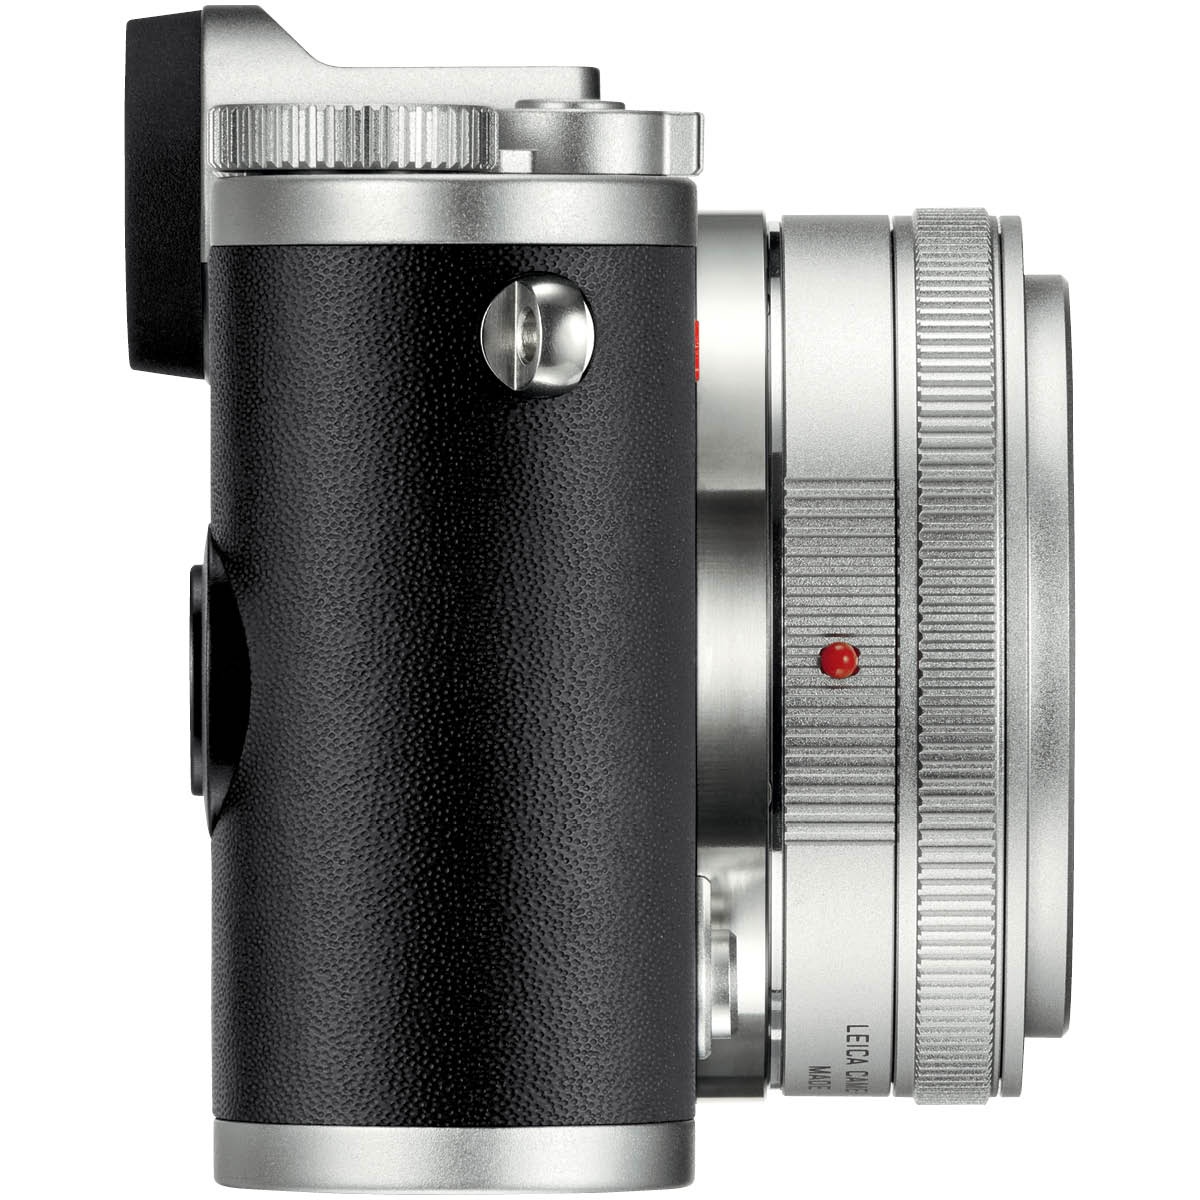 Leica CL Prime Kit mit 18 mm 1:2,8 Silber